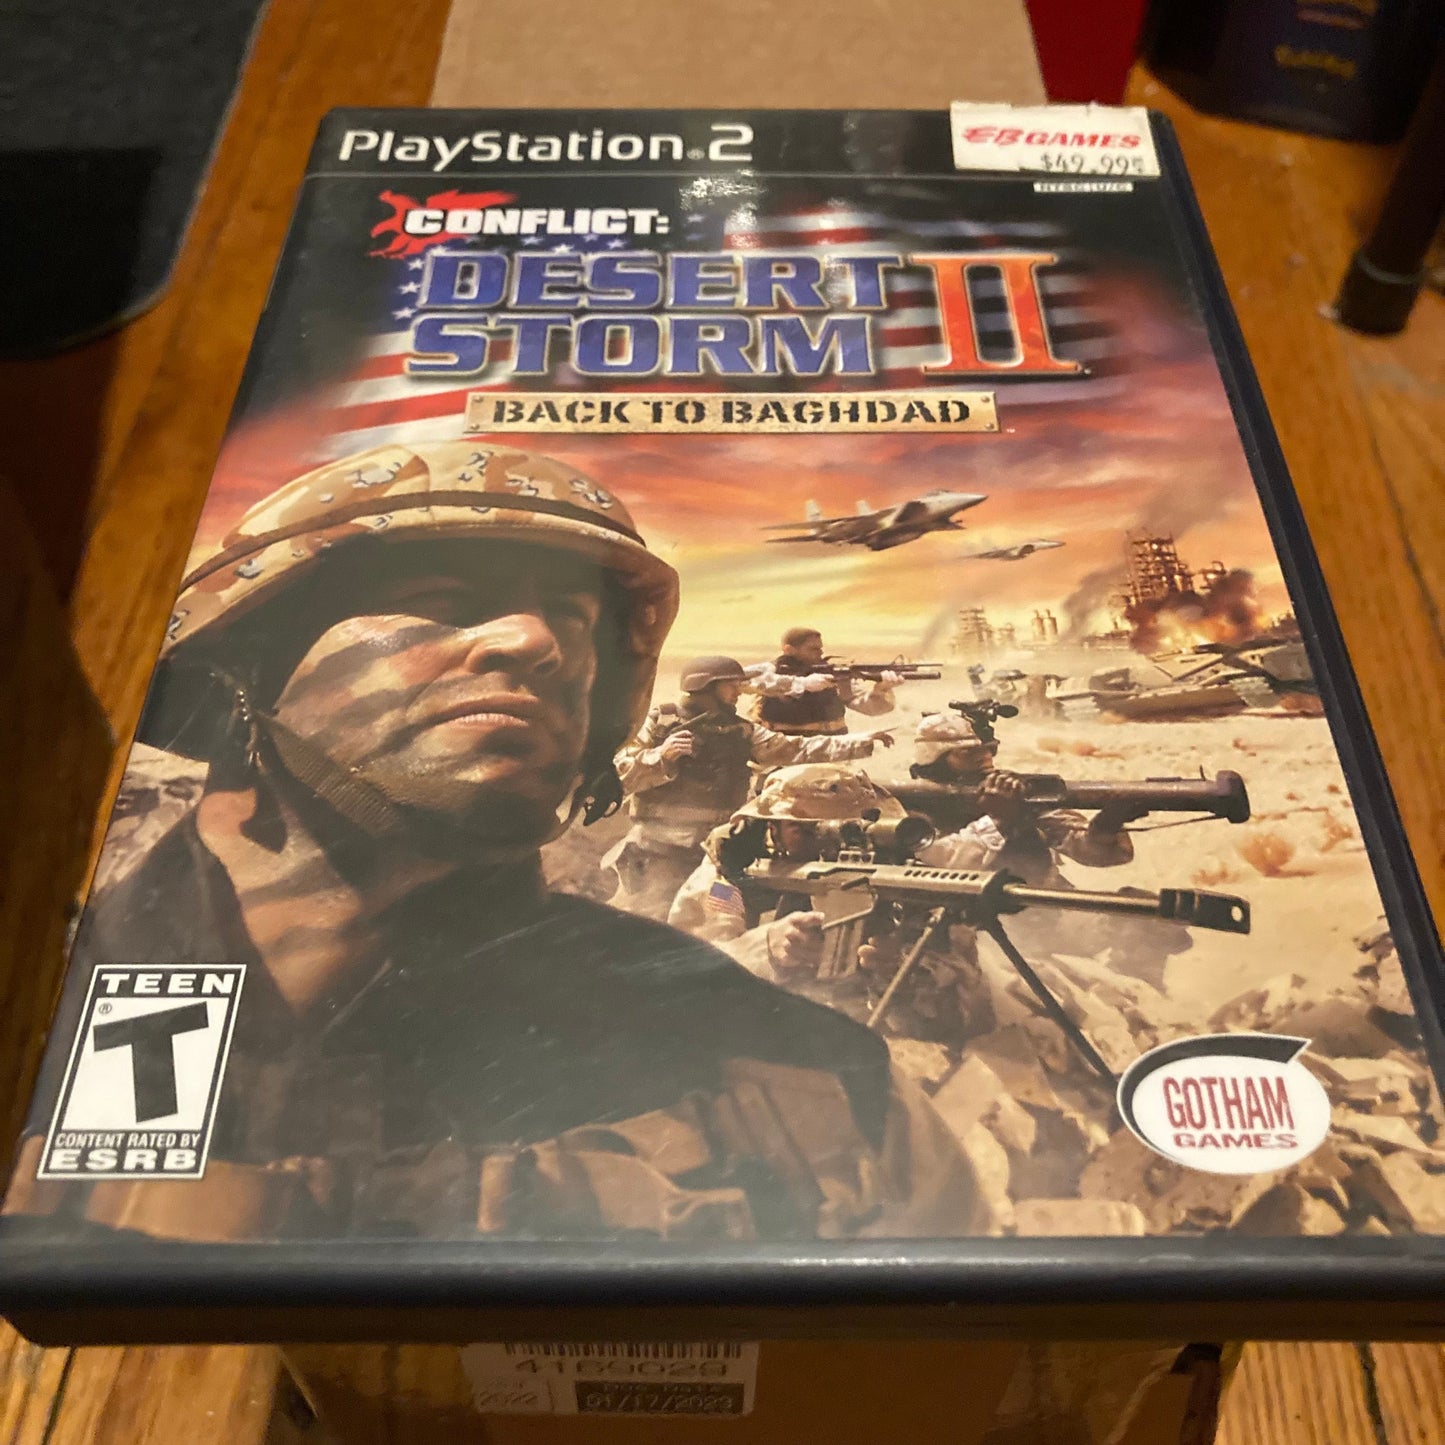 PS2 - Conflict: Desert Storm 2 - Back to Baghdad